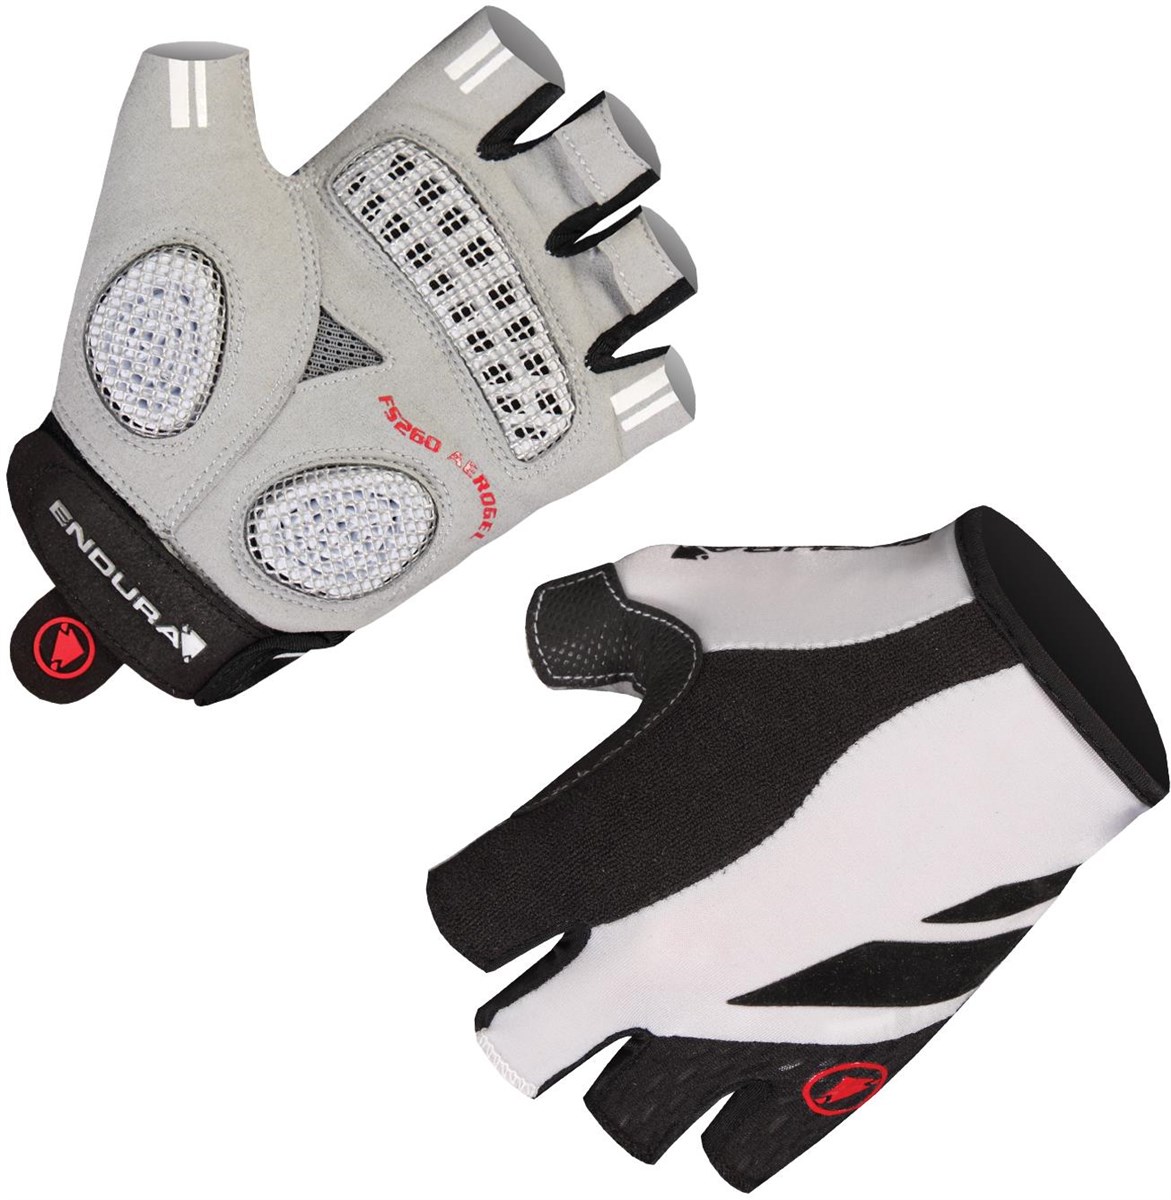 Endura FS260 Pro Aerogel II Short Finger Cycling Glove product image